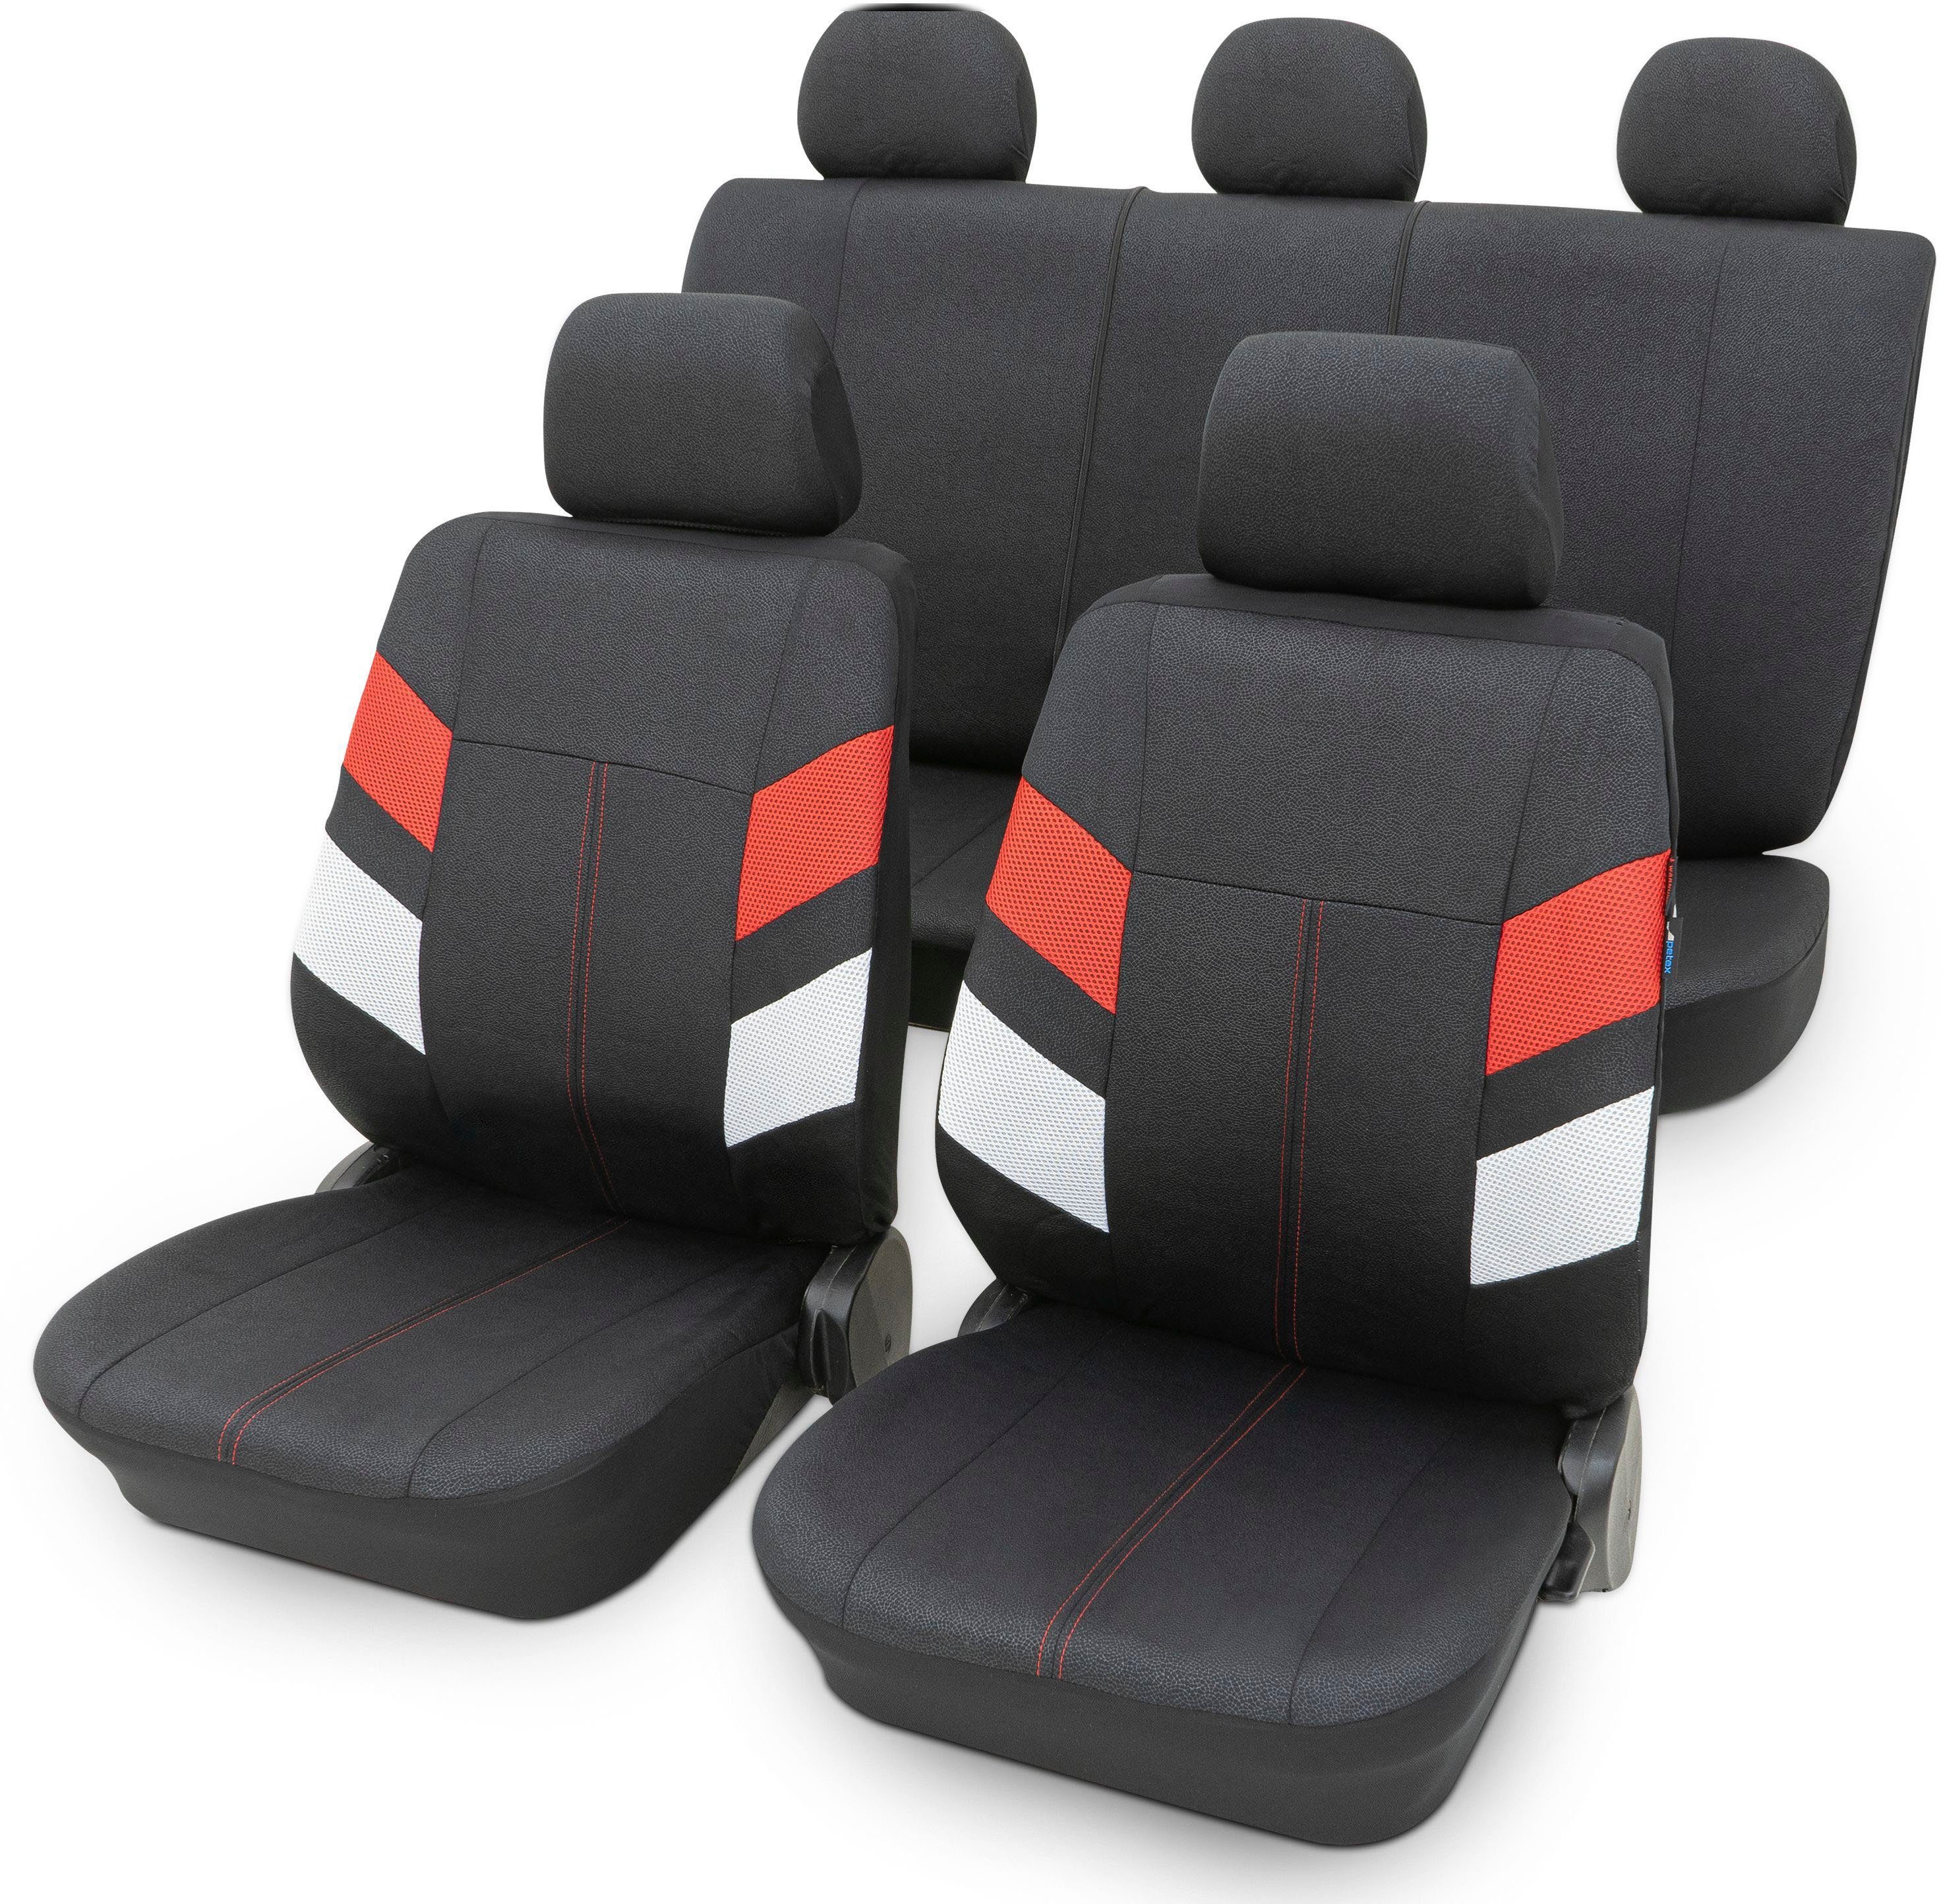 für Set rot mit/ohne SAB Seitenairbag, Geeignet Fahrzeuge Petex universelle Autositzbezug 1 Passform, "Maui" Vario 11-tlg